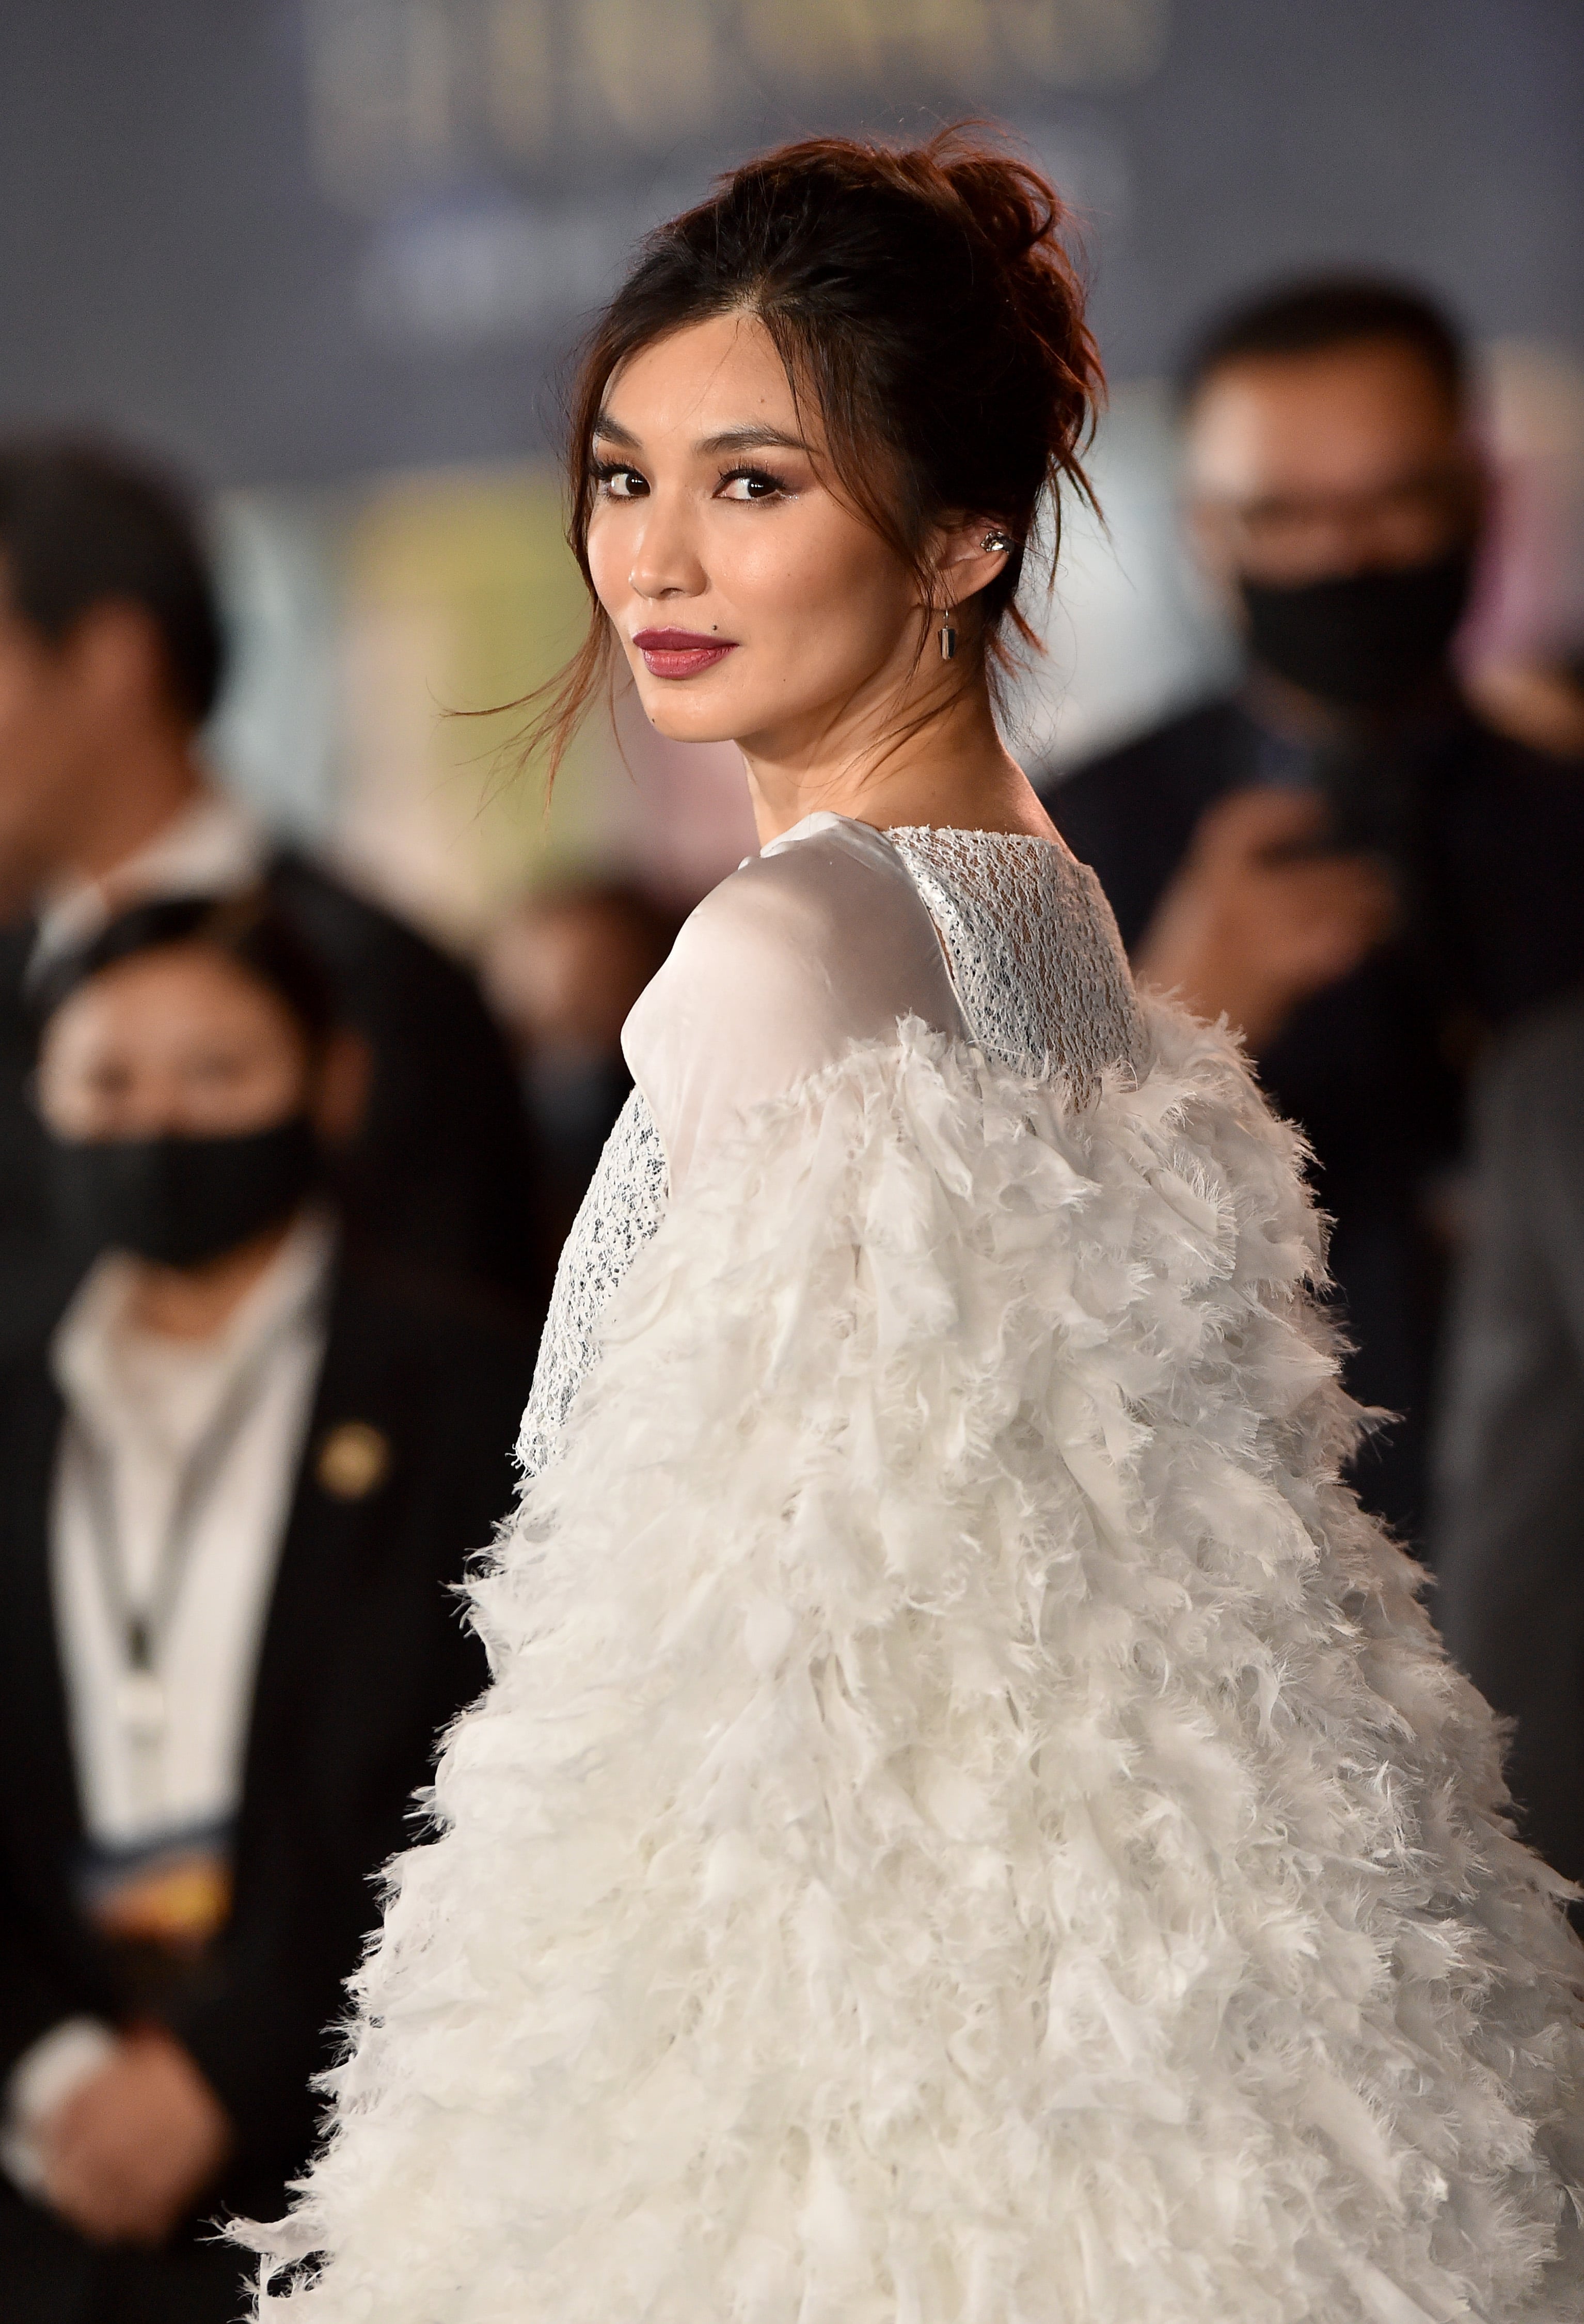 Gemma Chan Looks Angelic in Her White Louis Vuitton Dress